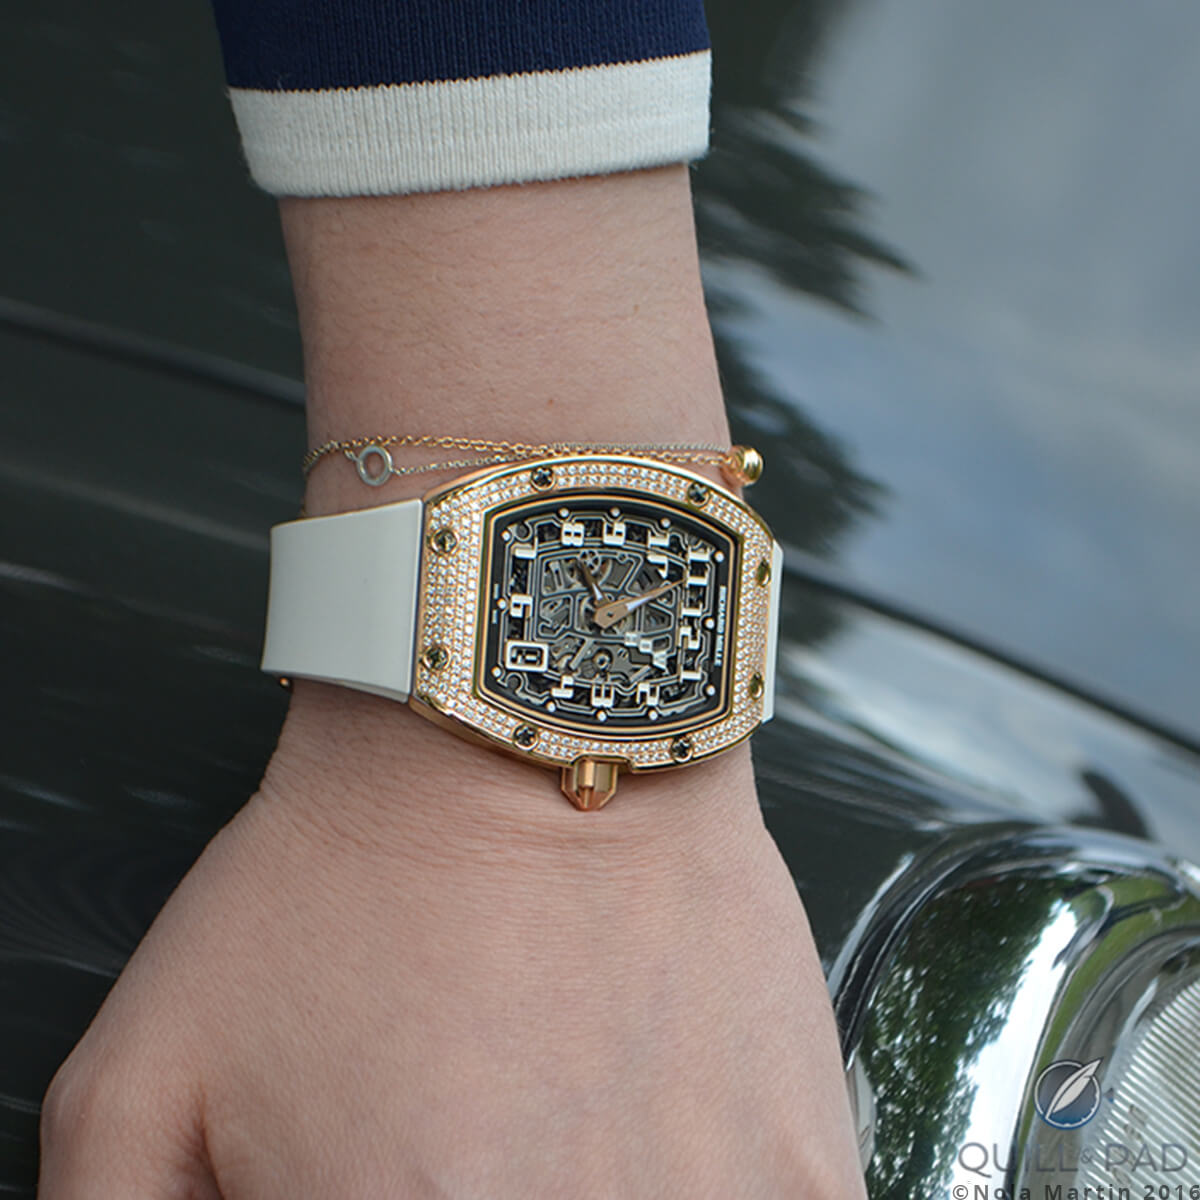 Richard Mille diamond-set RM 67-01 Extra Flat on the wrist during the 2016 Princess Rally